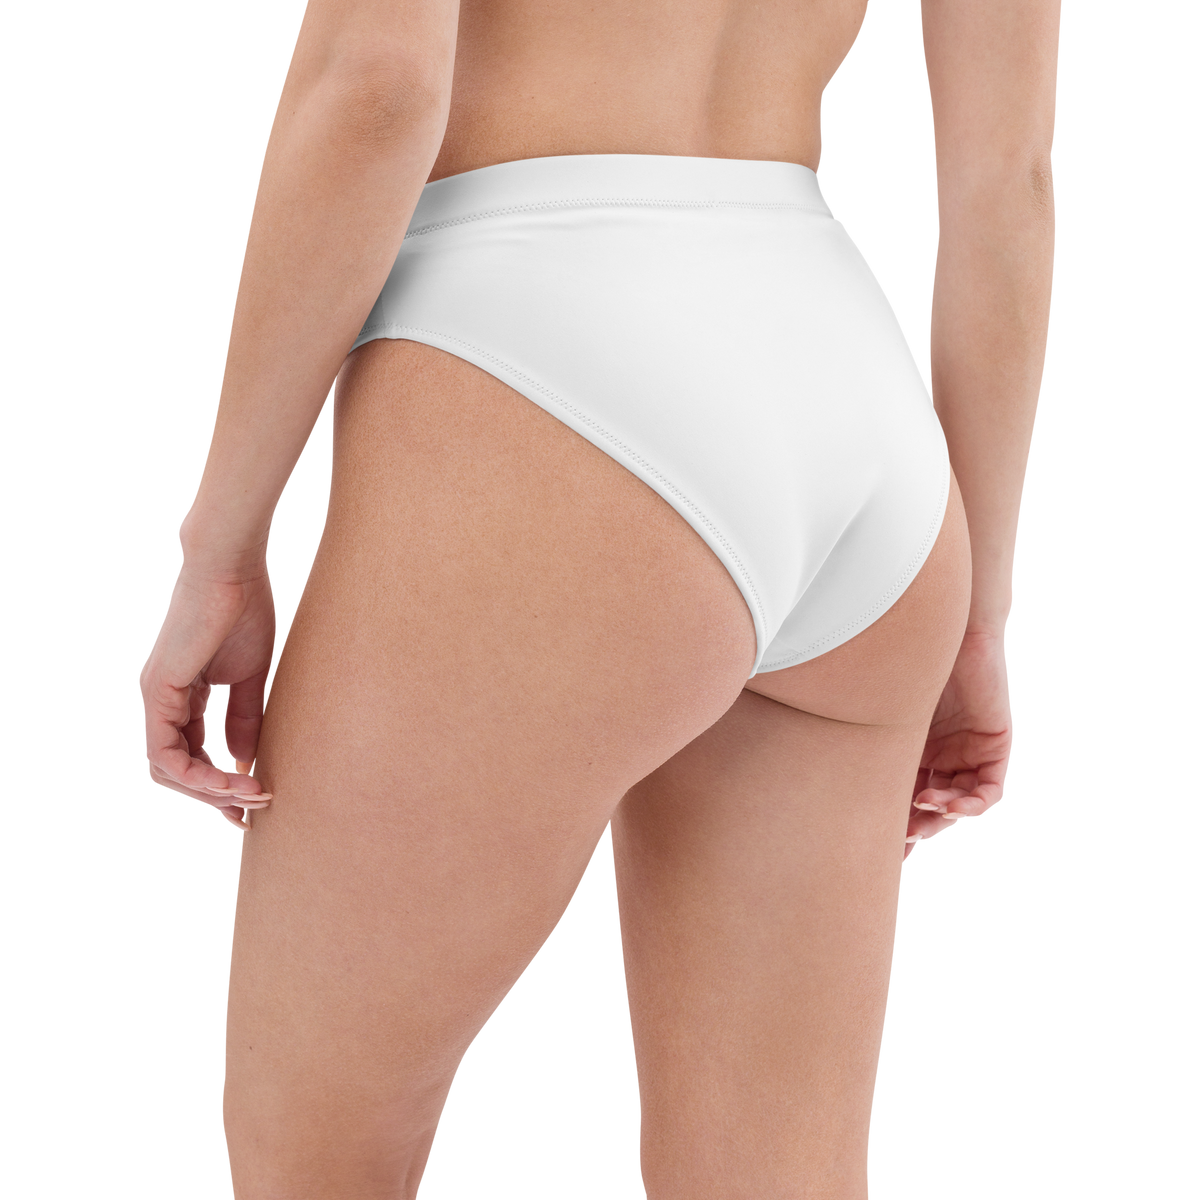 Velisse Origin bikini bottom, high-waisted bikini bottom, black bikini bottom, unicorn, simple bikini, minimalistic, minimalistic swimwear, minimalistic bikini, white bikini